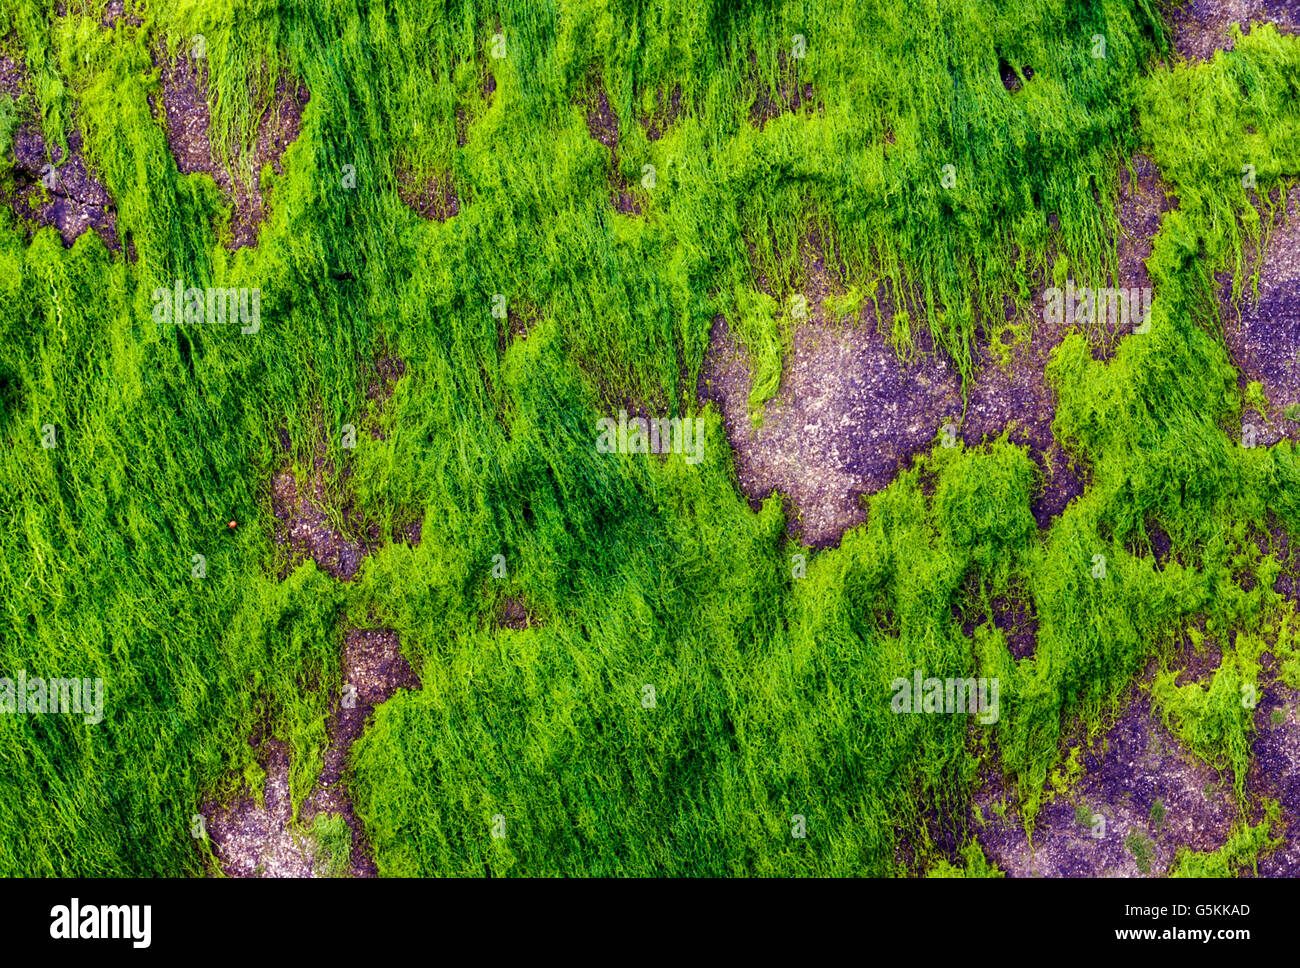 River rocks covered with green moss & lichen, Quillayute River Delta, Pacific Ocean, Olympic Peninsula, La Push, Washington USA Stock Photo